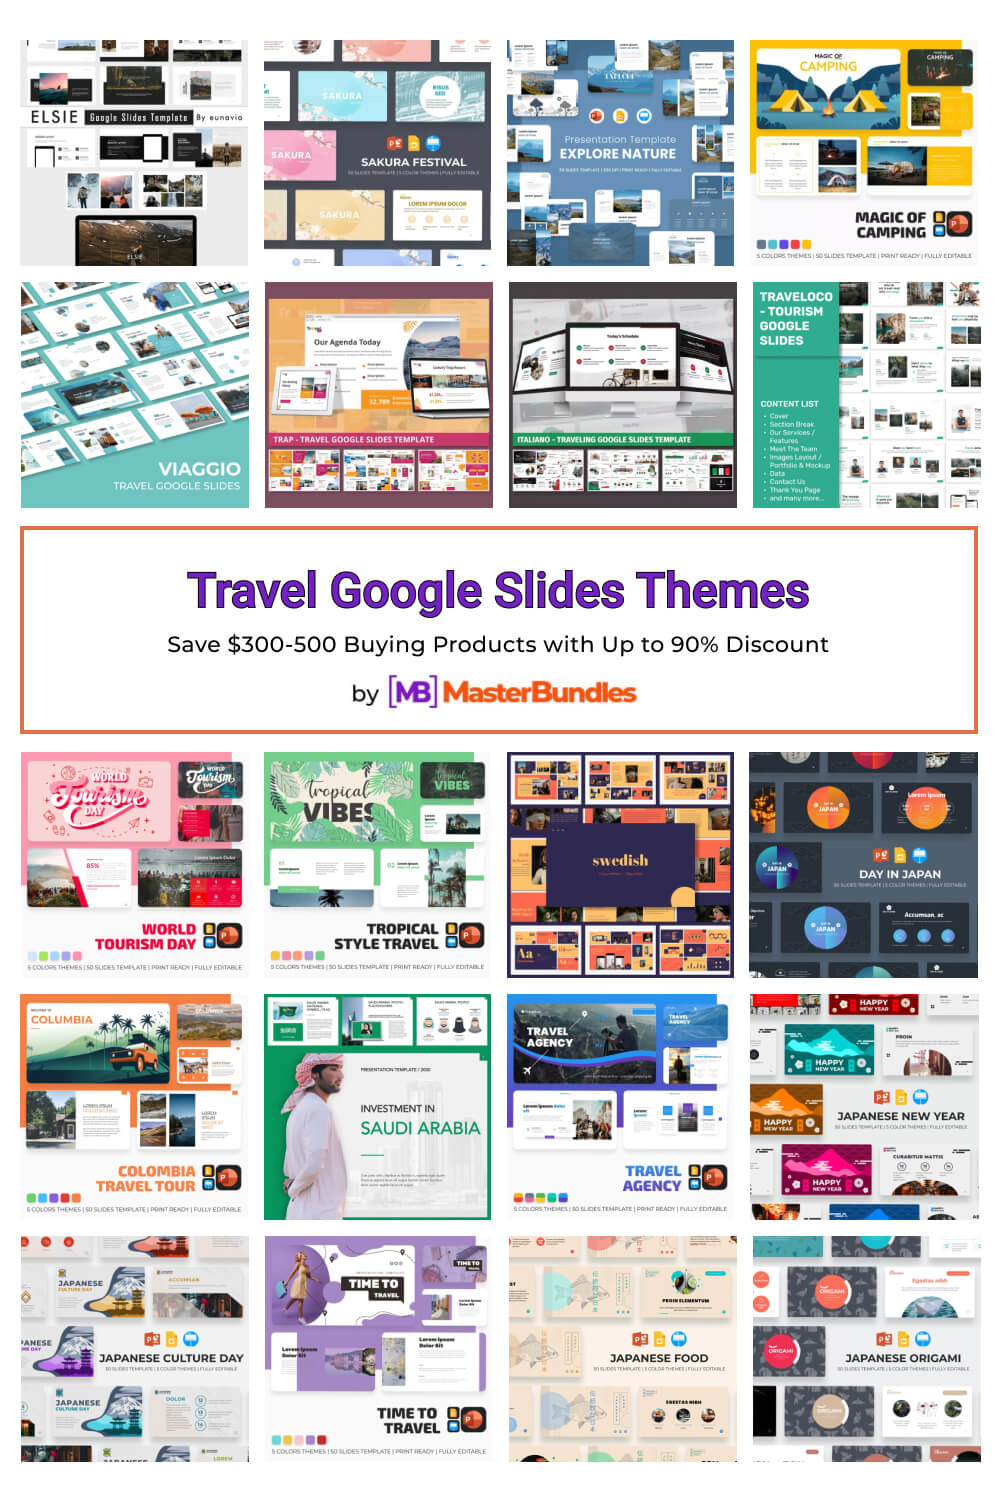 travel google slides themes pinterest image.